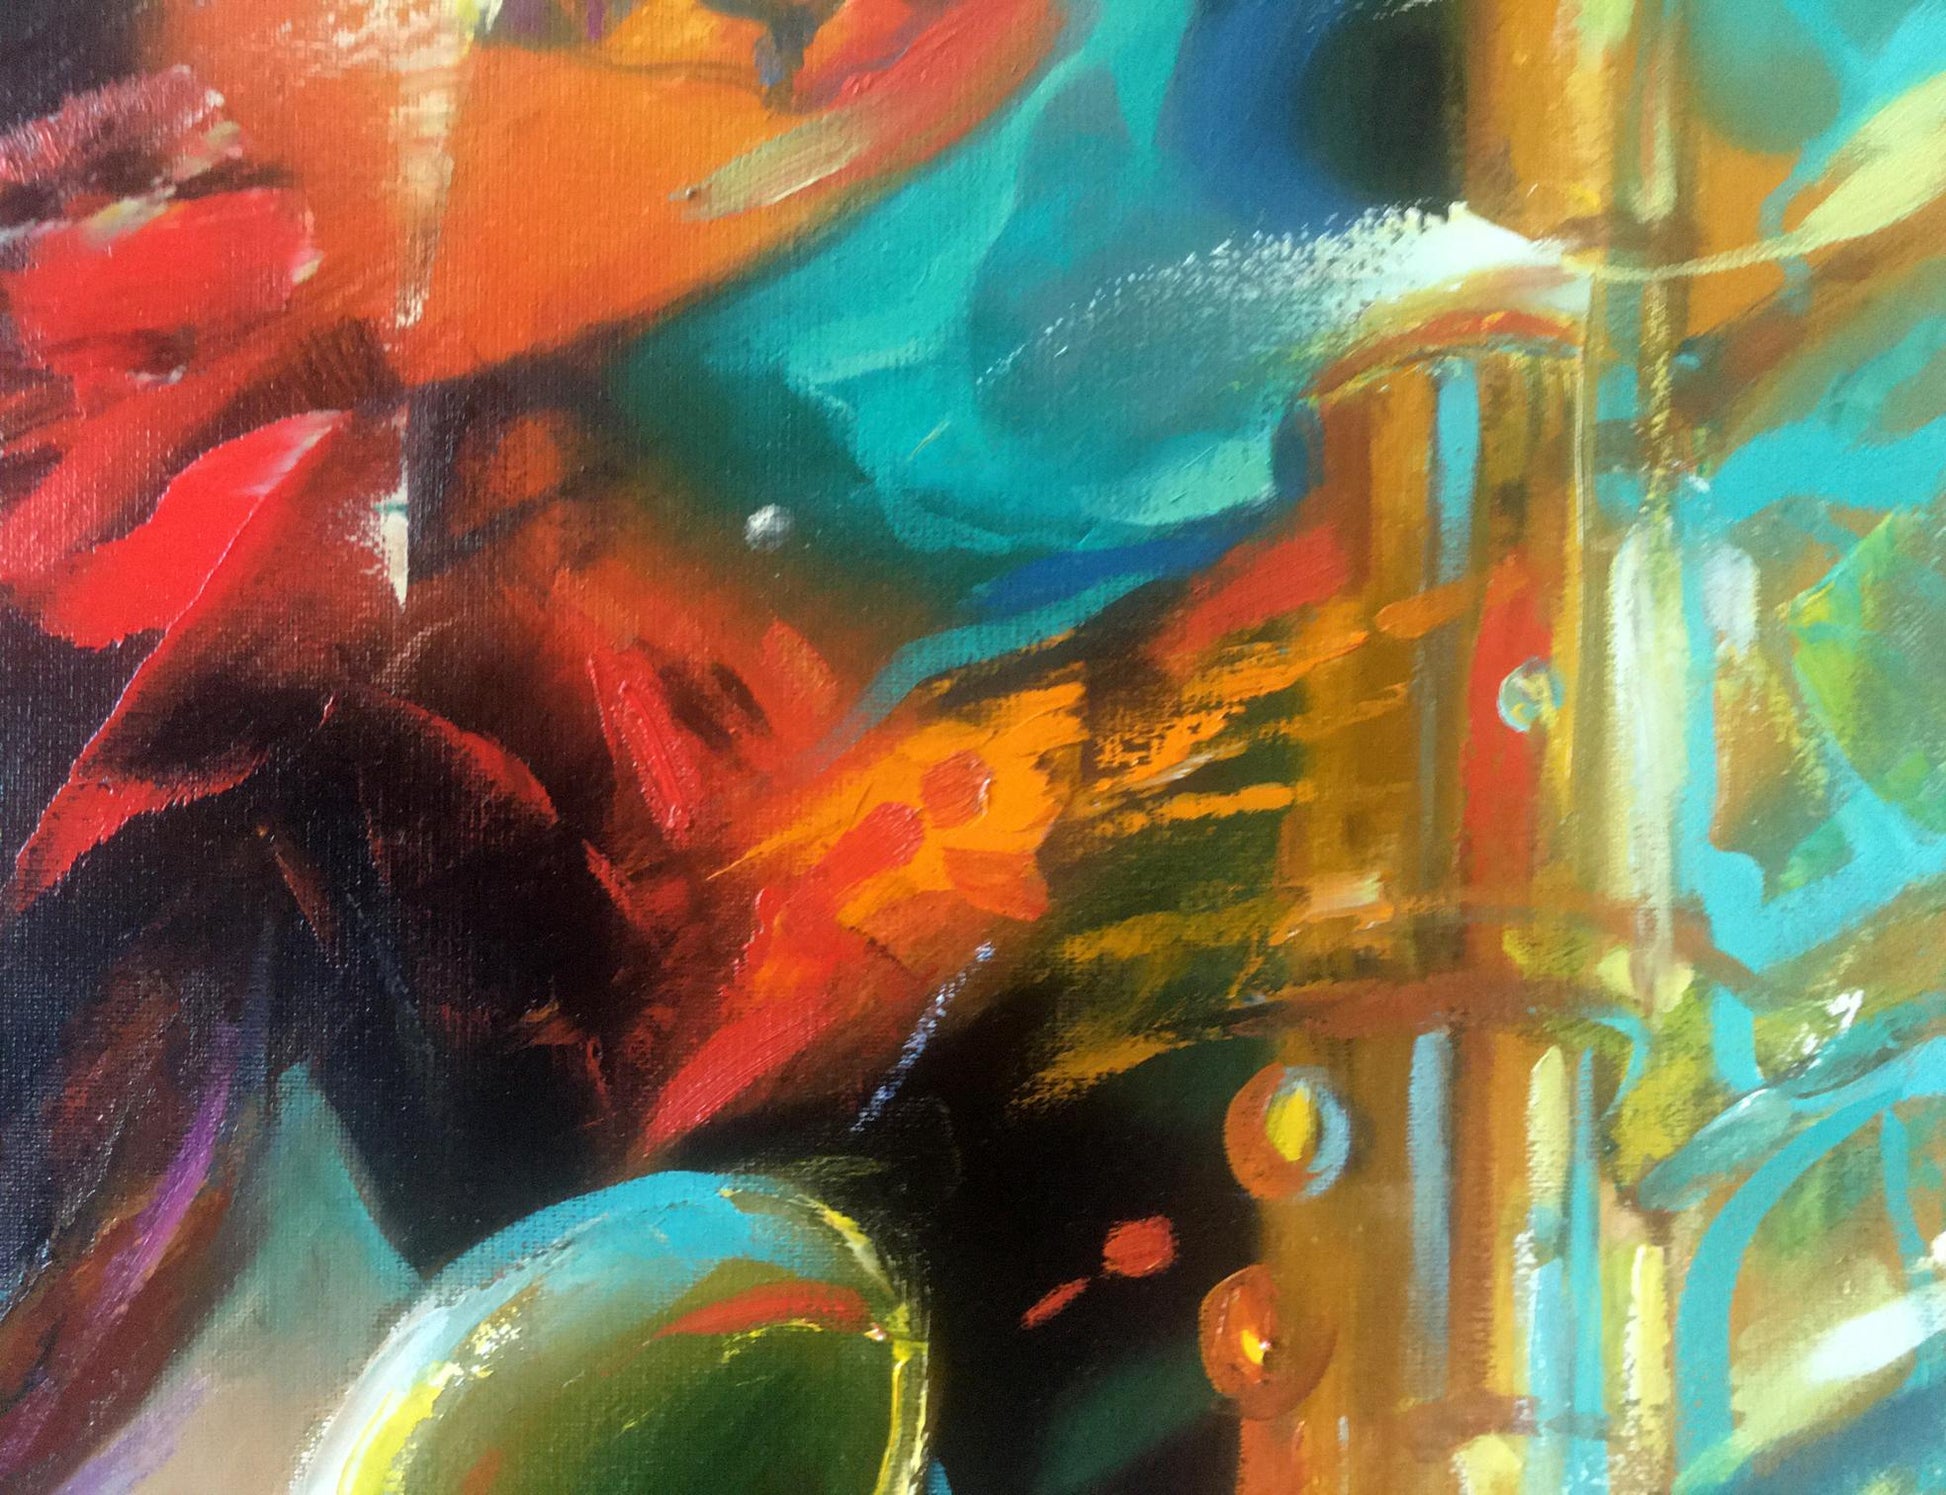 The abstract oil painting "Night Blues" by Anatoly Tarabanov evokes a sense of mystery